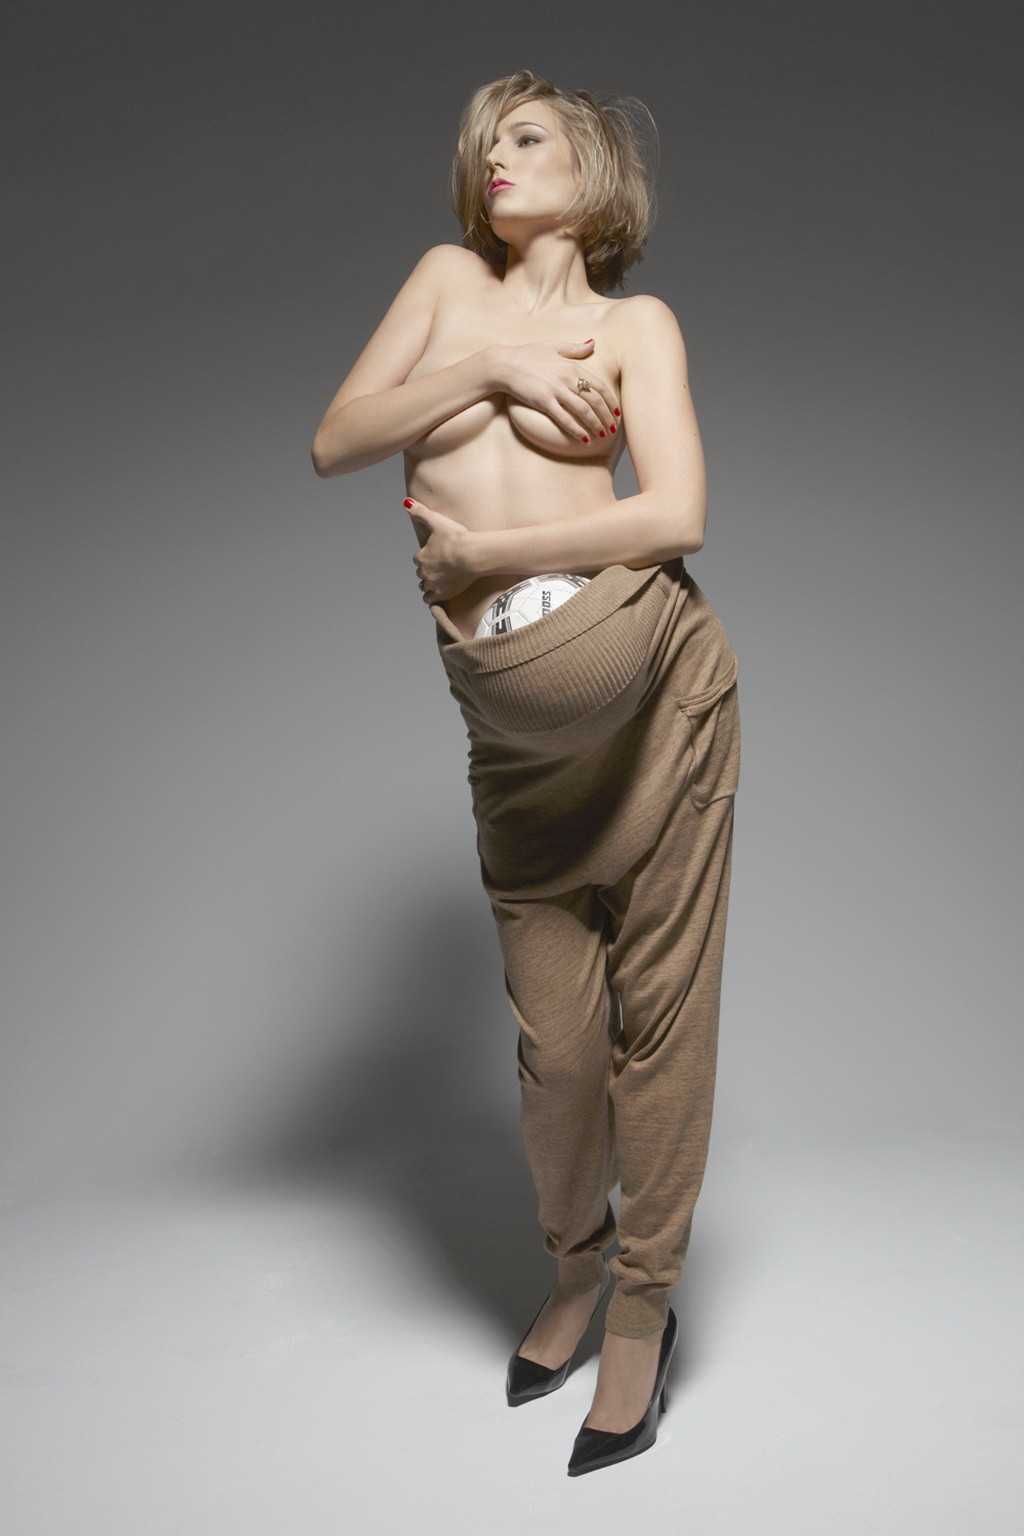 Leelee sobieski topless ma nascondendo le sue tette per 'ti amo' rivista photoshoo
 #75305340